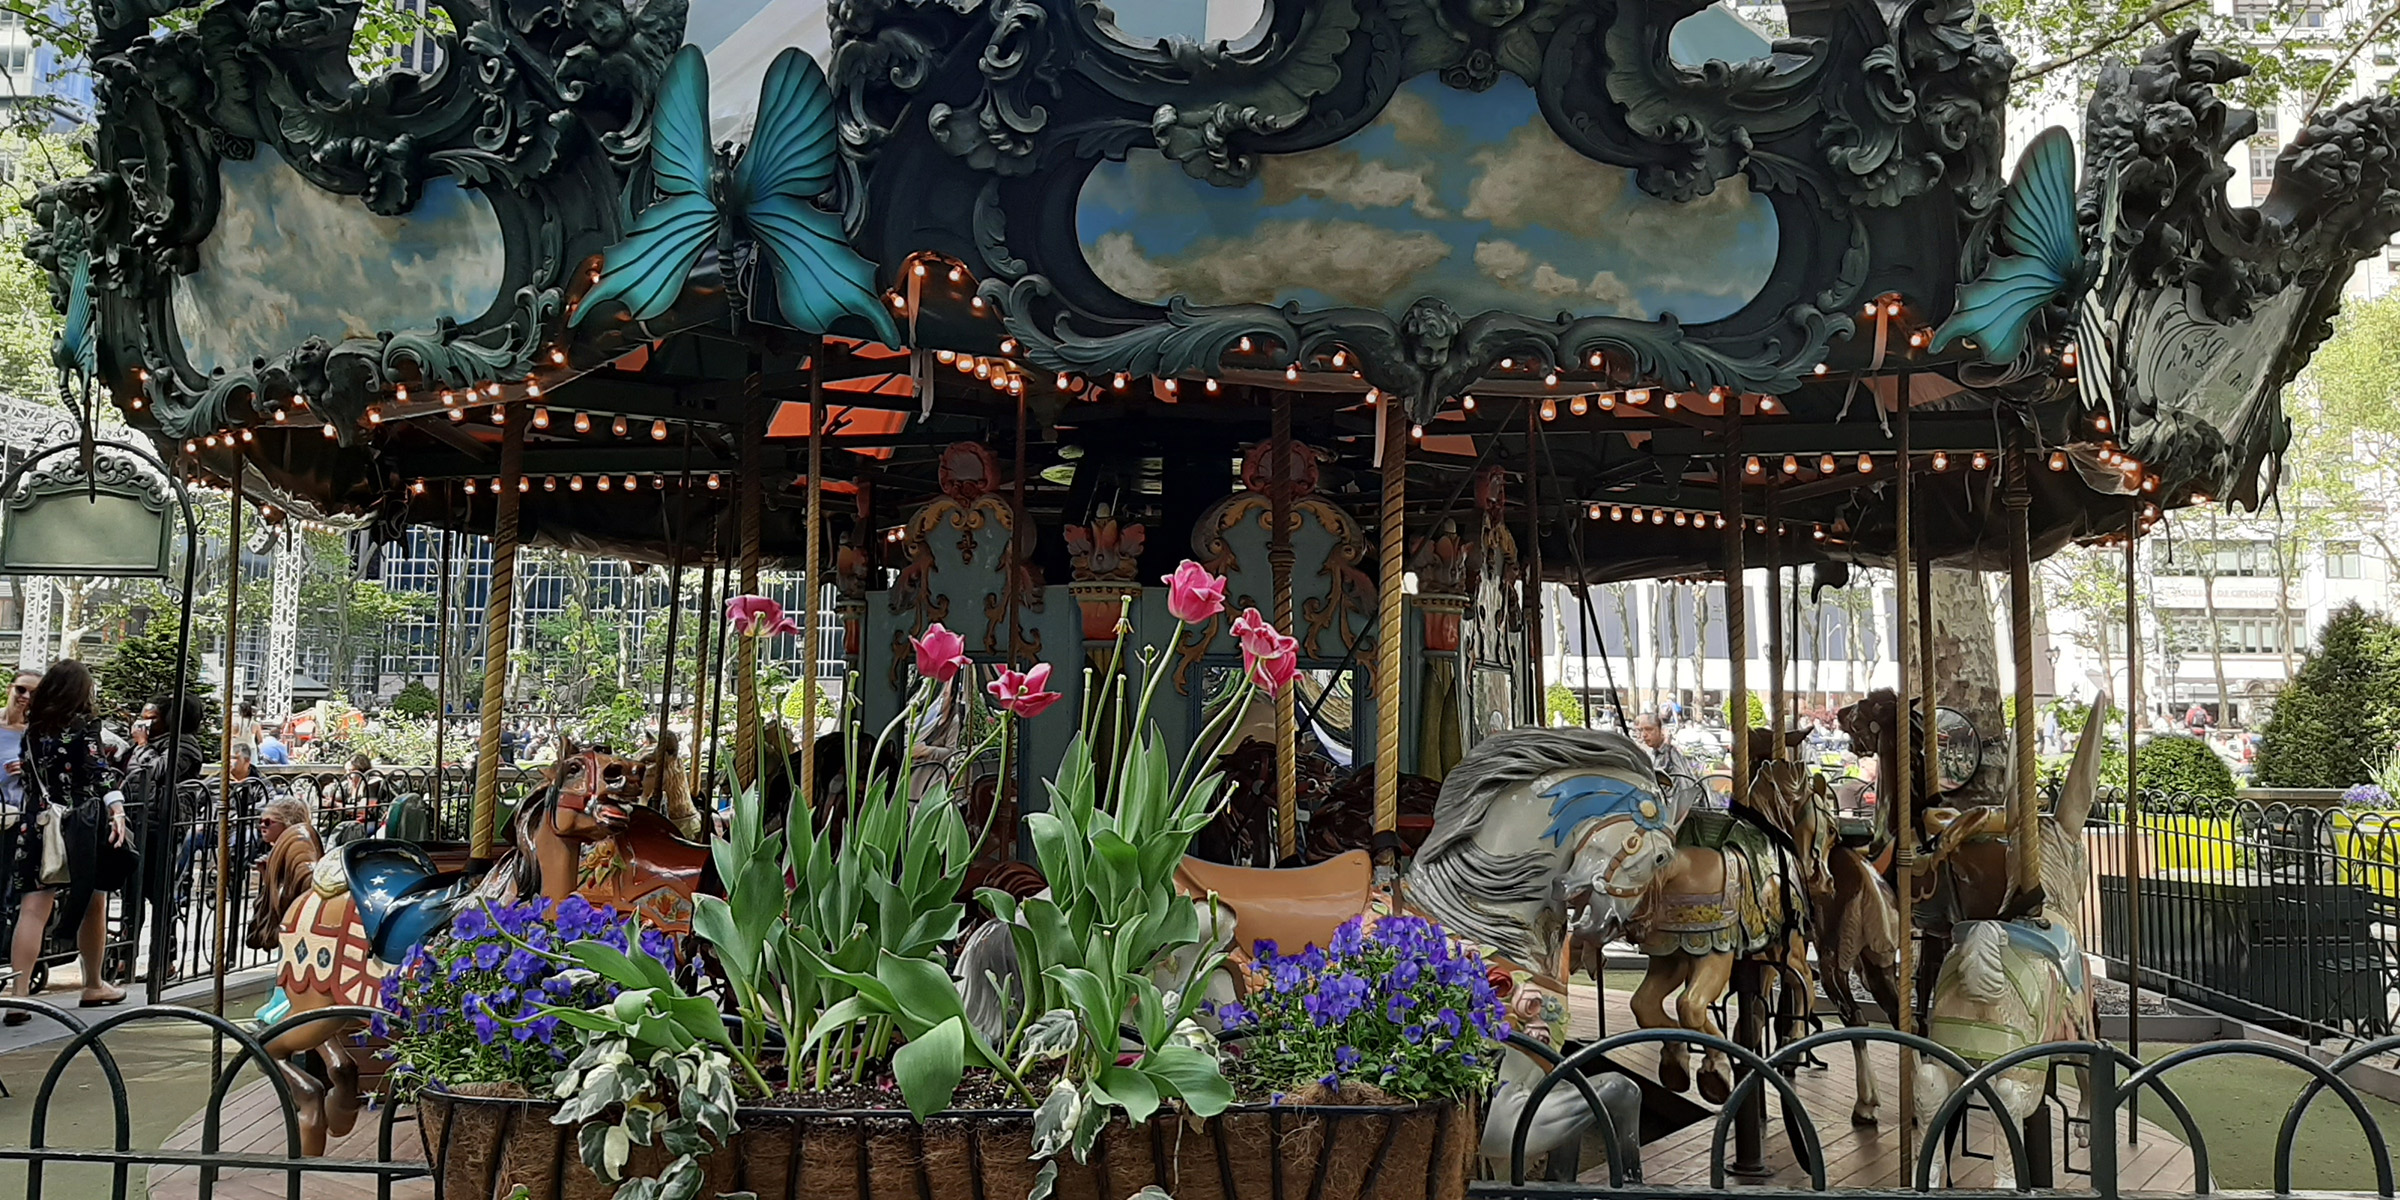 Merry-go-round at Bryant Park, New York